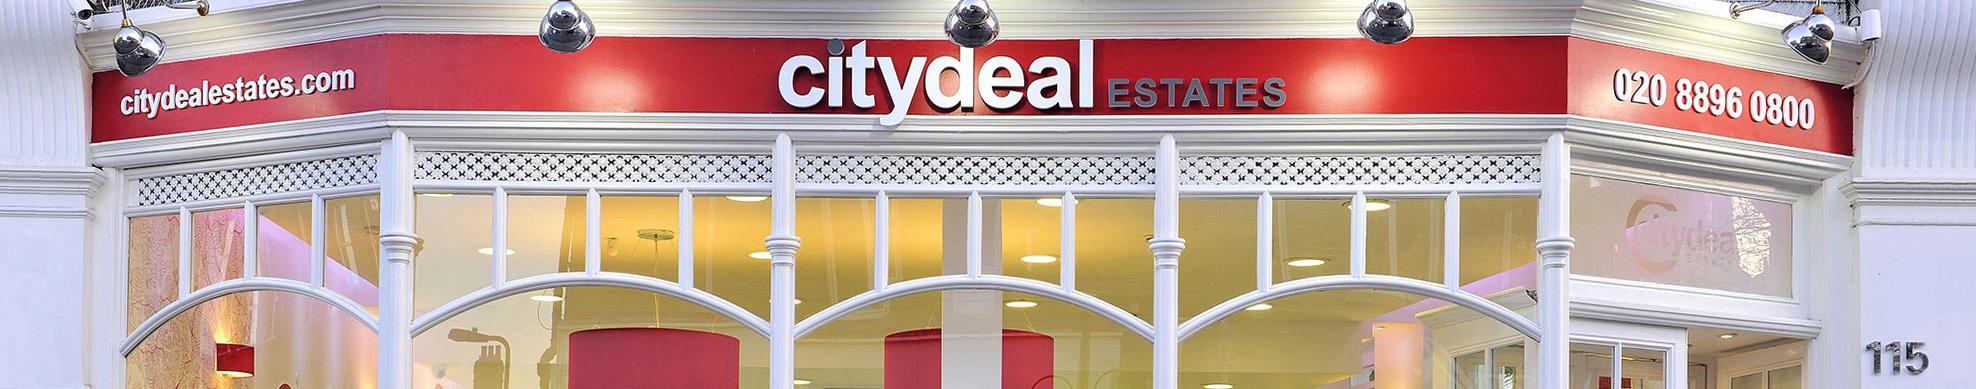 Citydeal Estates's profile banner